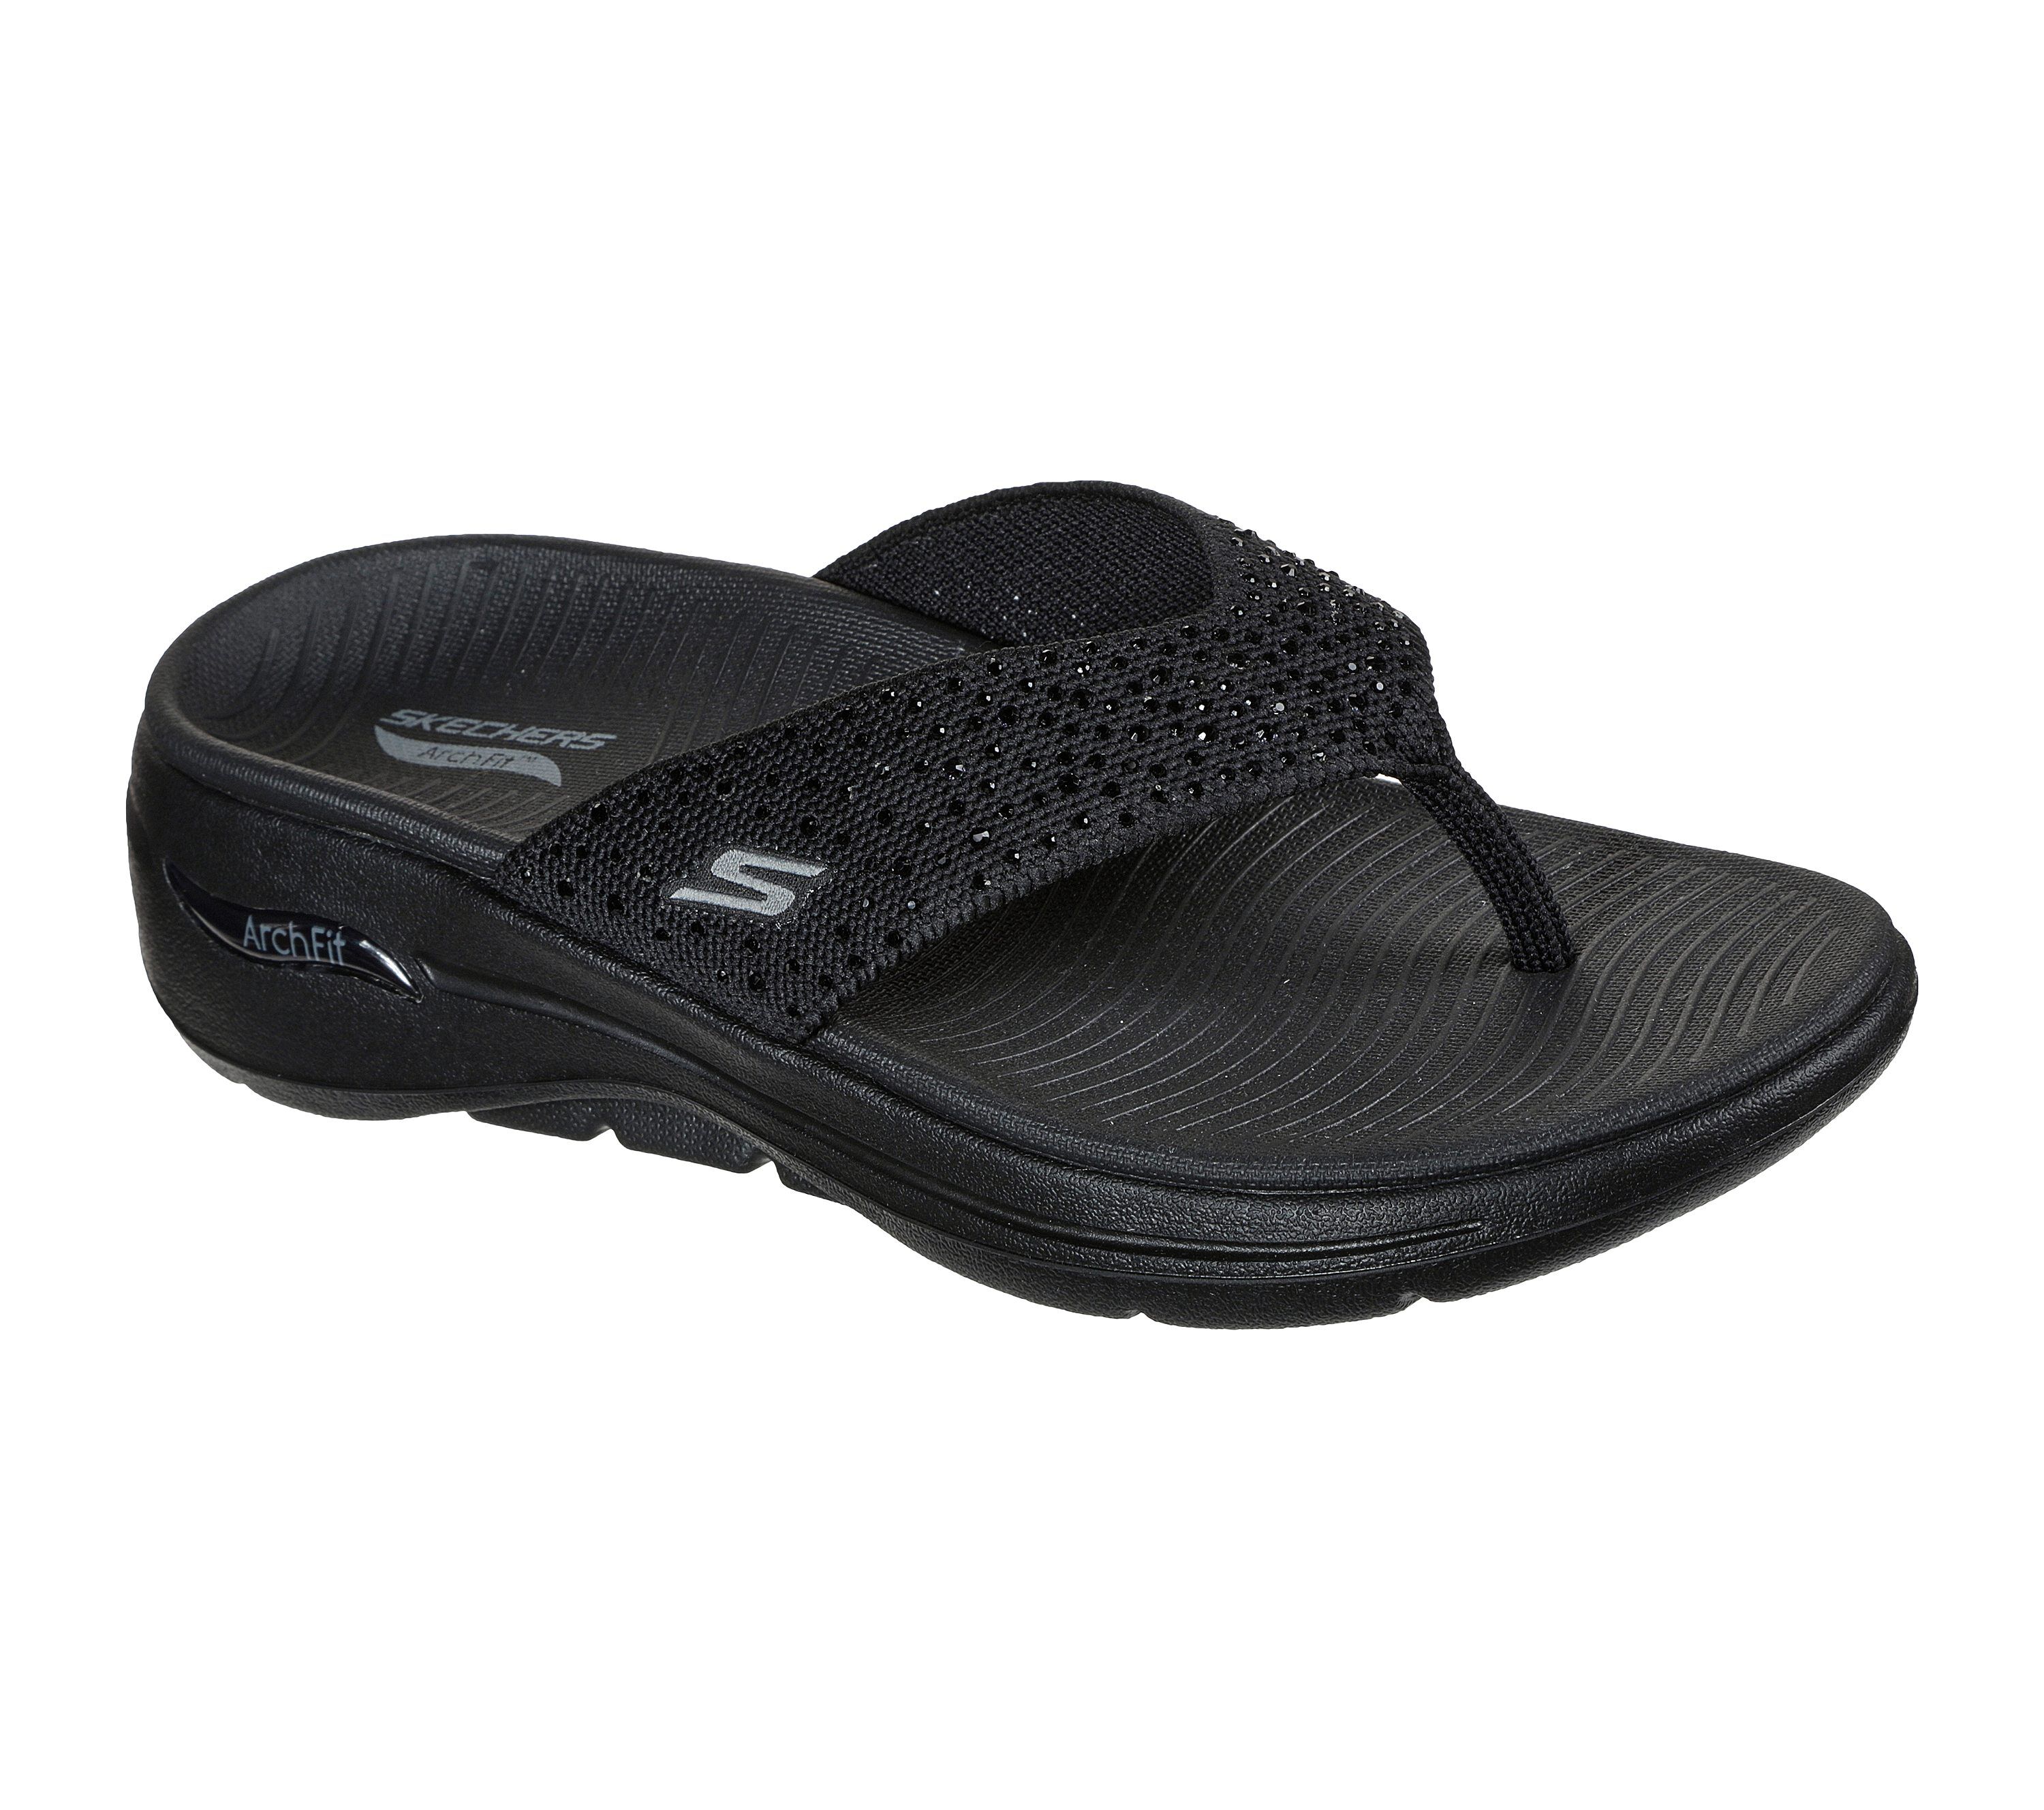 skechers sandals size 12